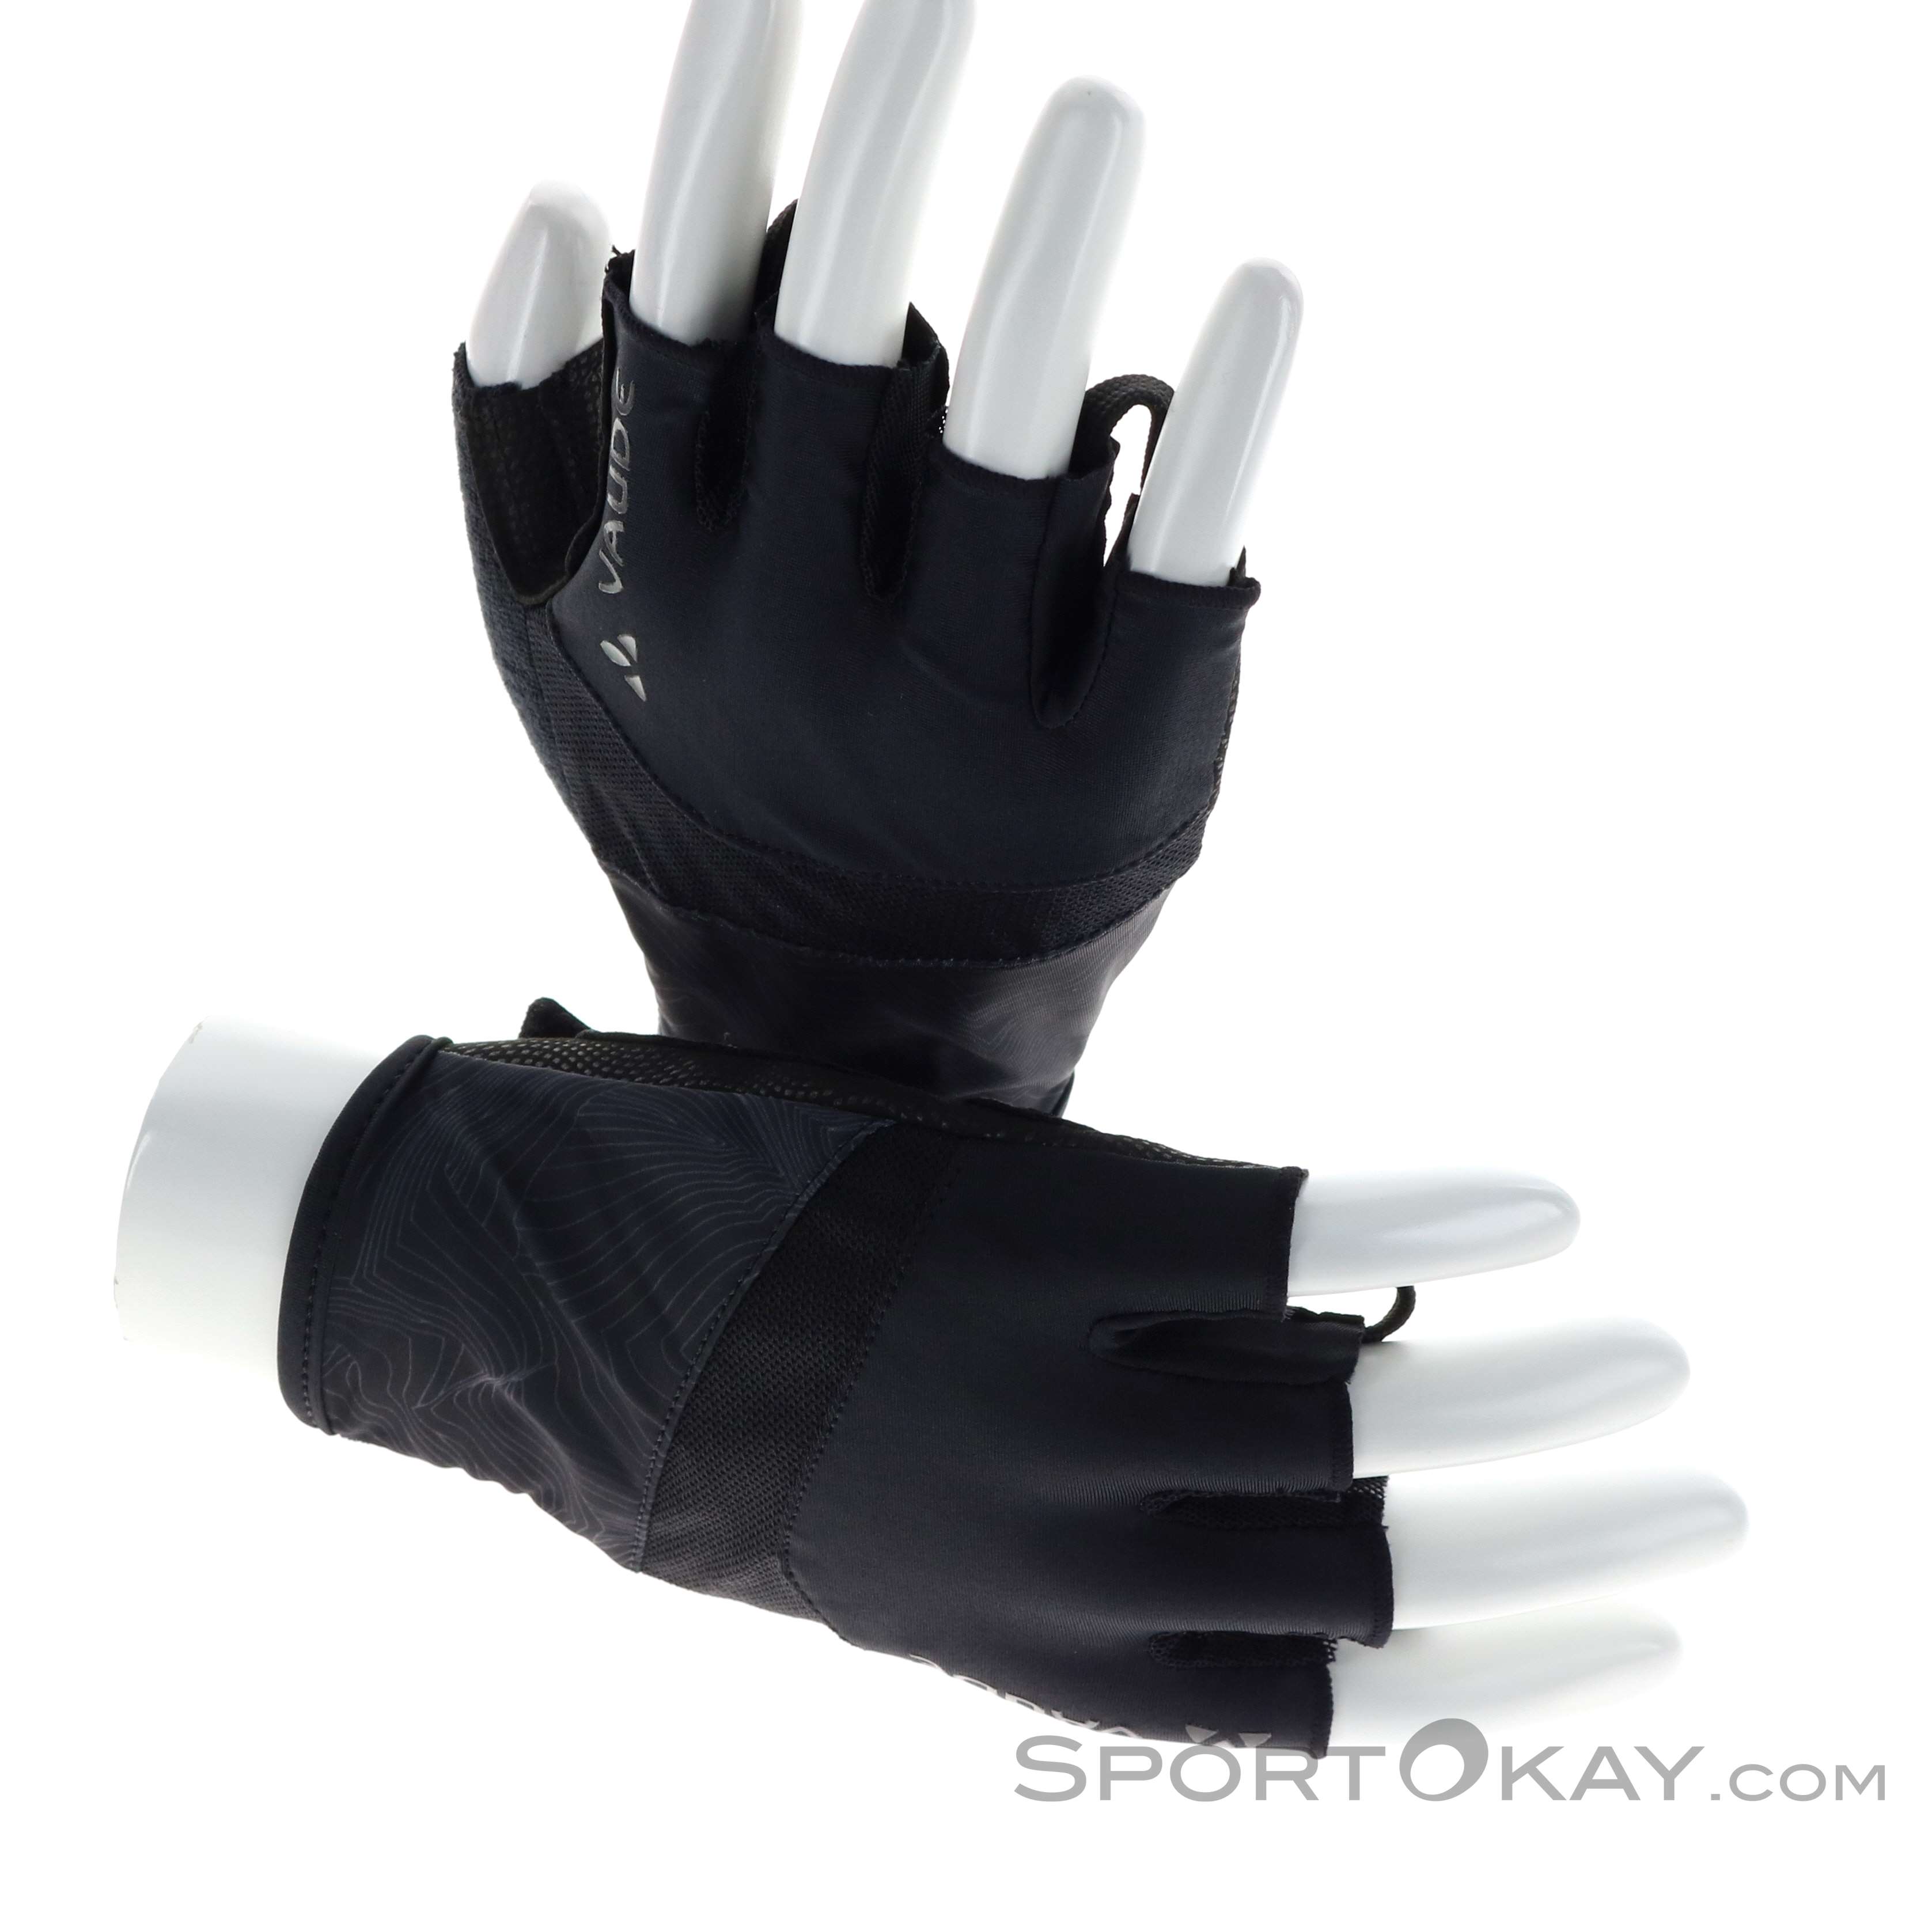 Advanced II gants de cyclisme homme